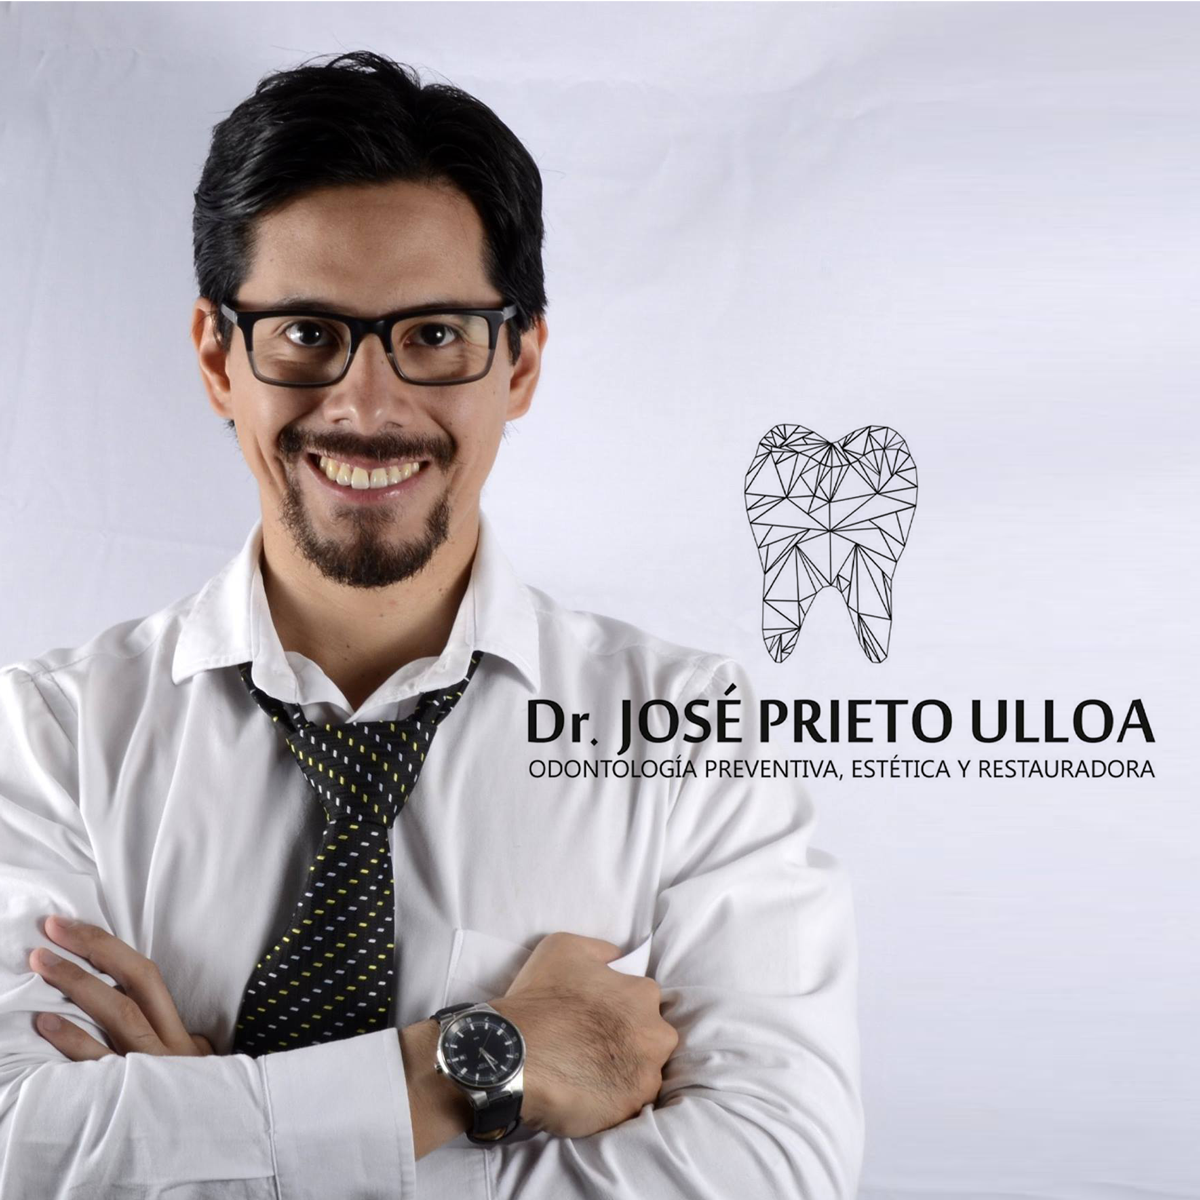 Dr. José Prieto